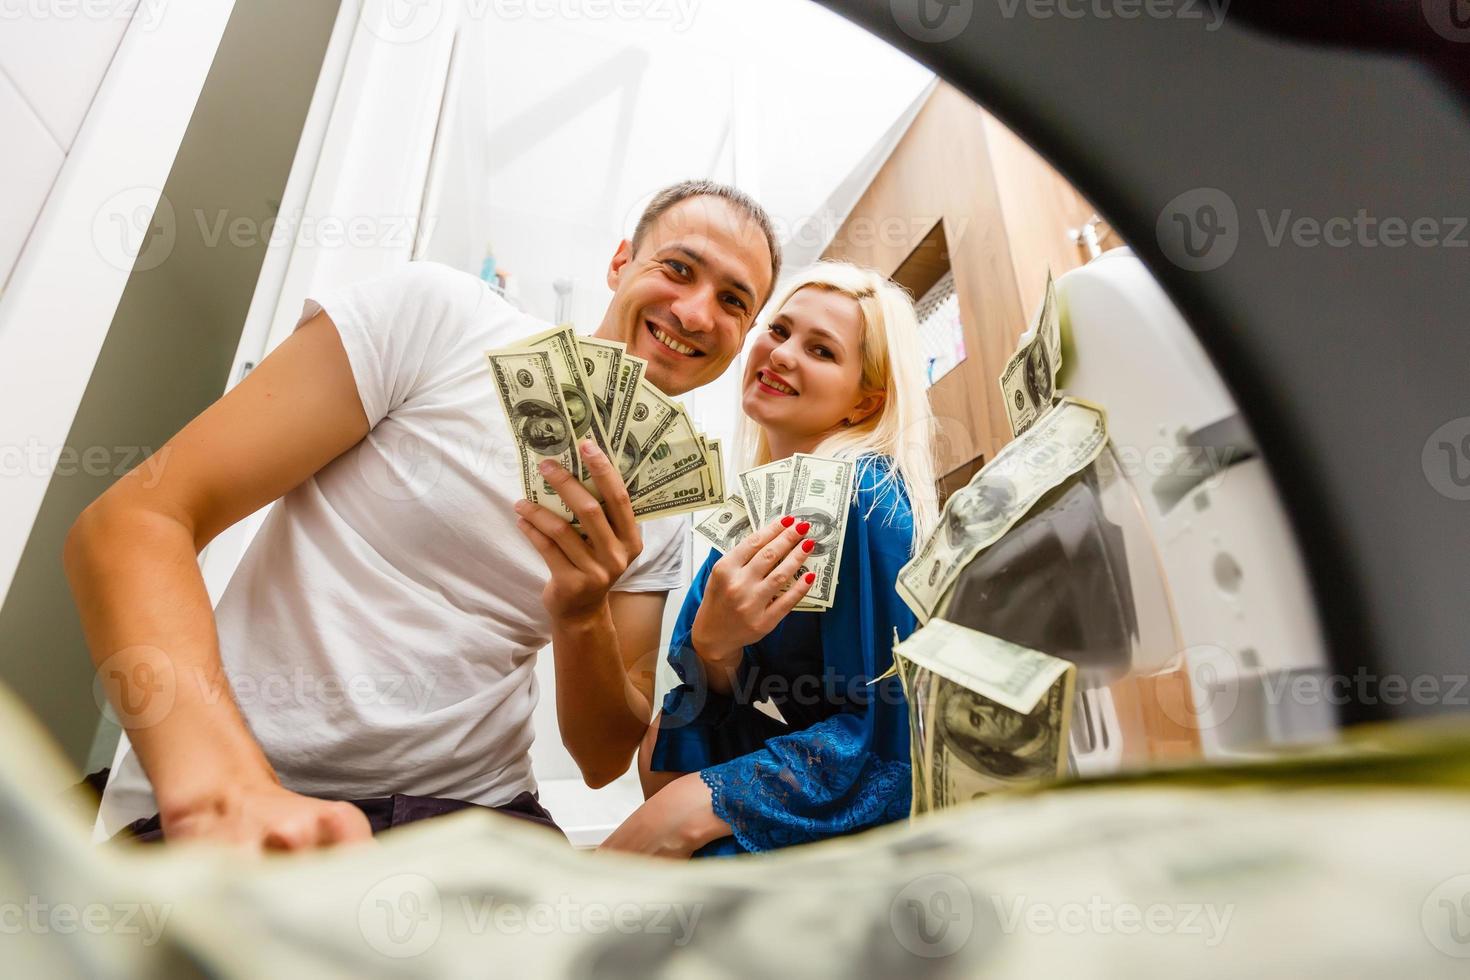 Female putting money into washing machine, closeup photo